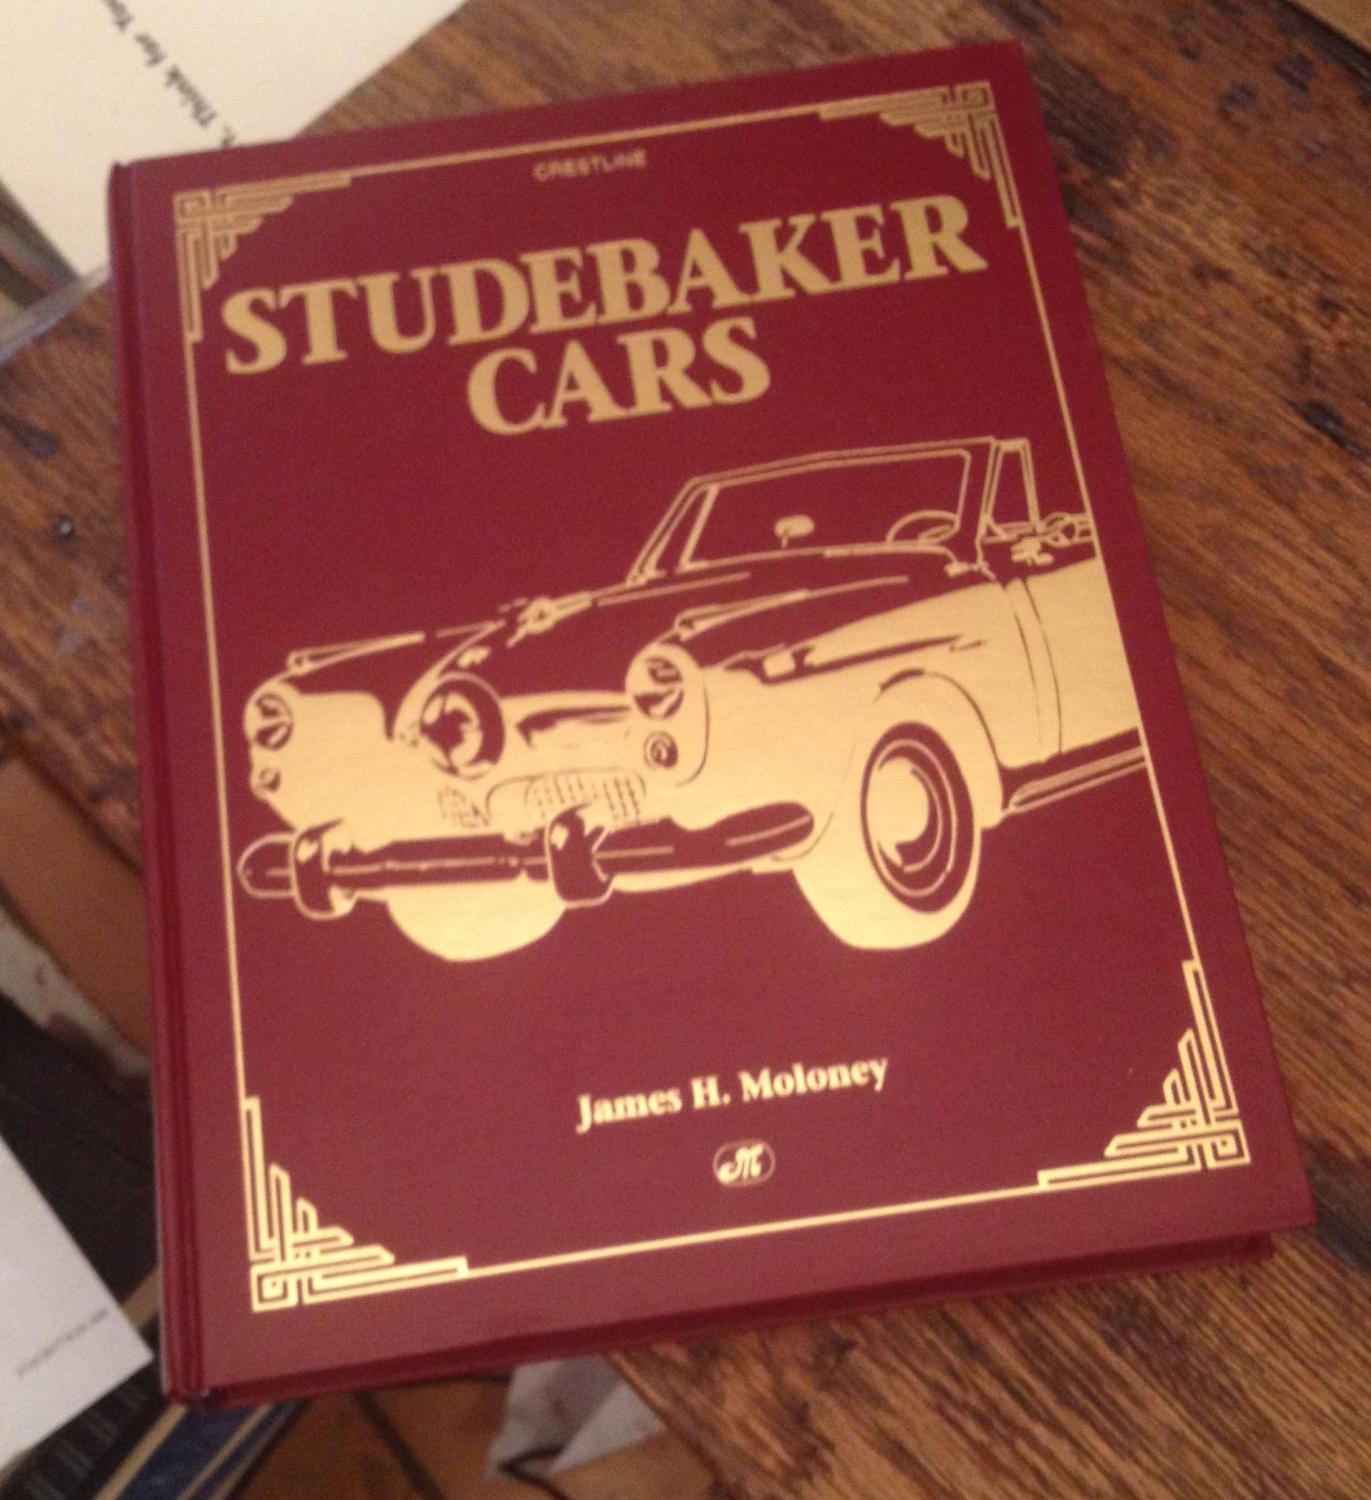 Studbaker Cars - Moloney, James